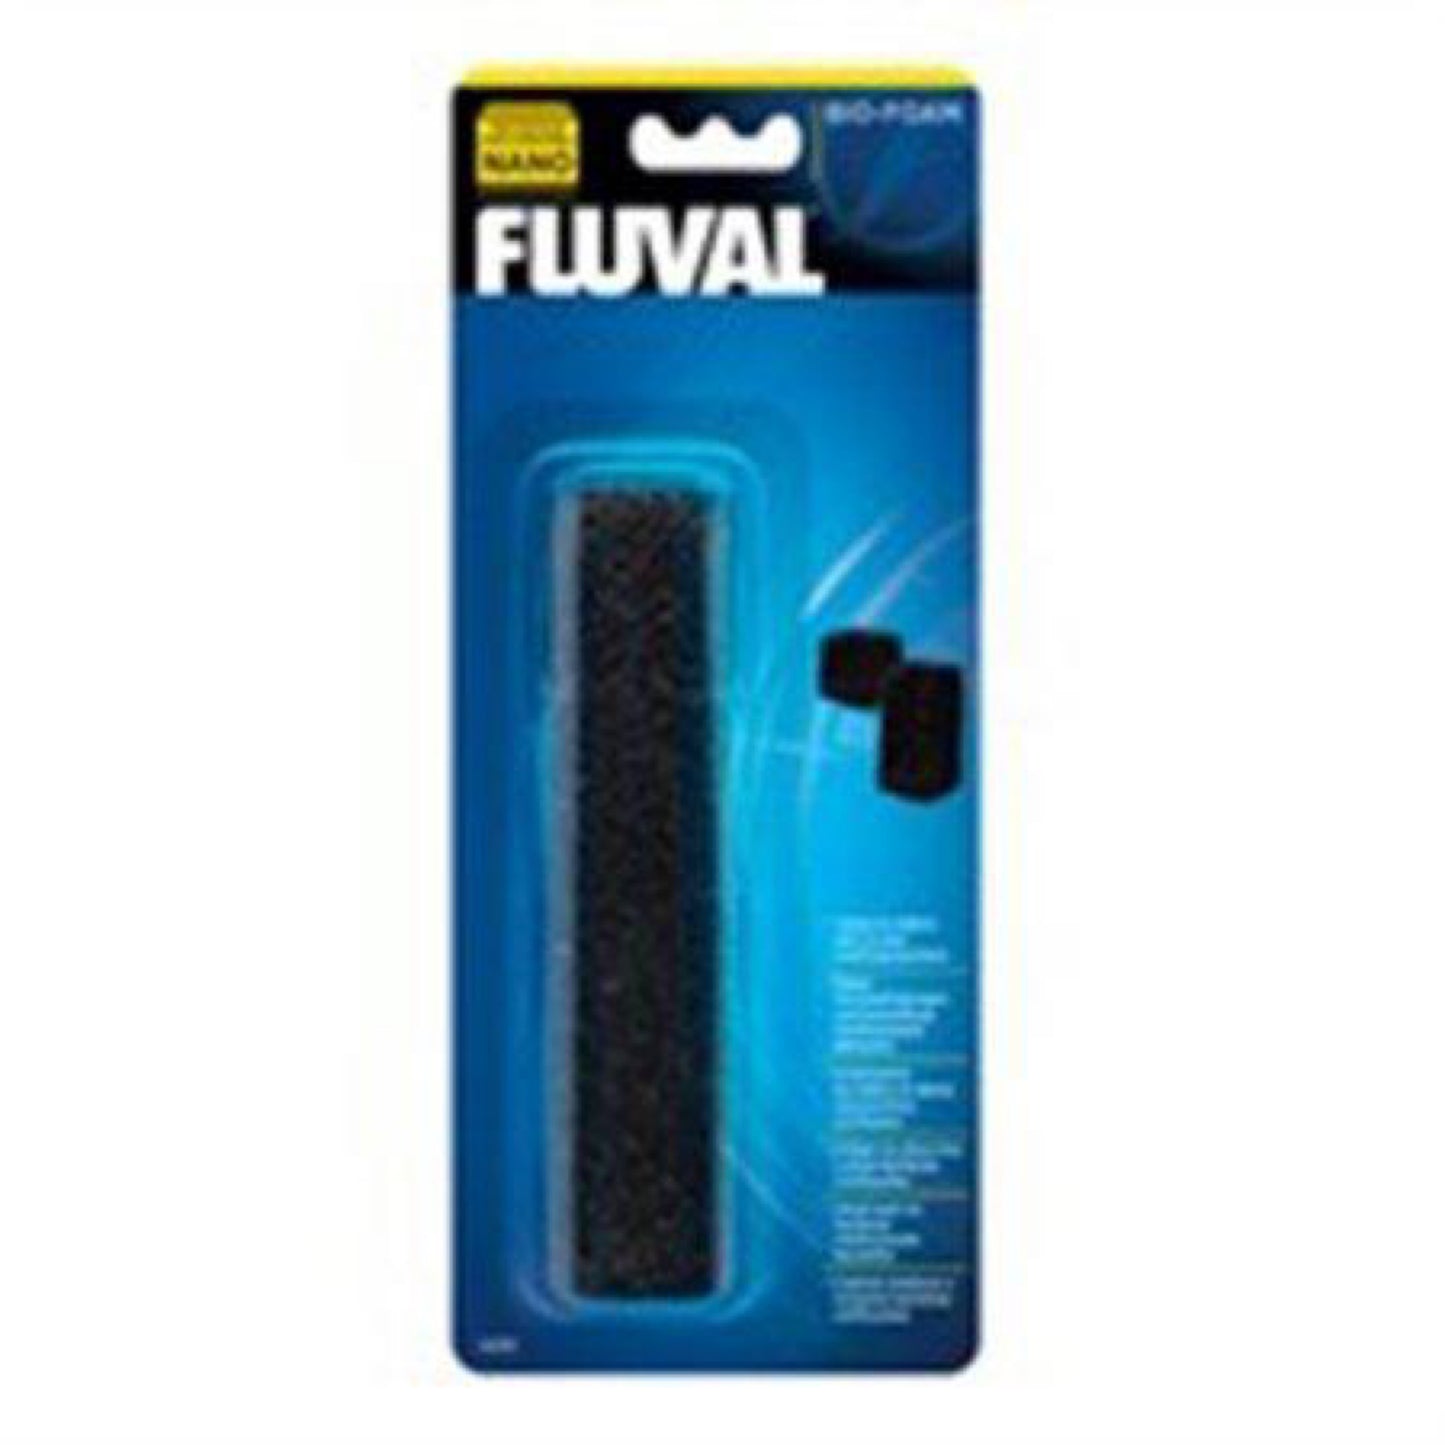 Fluval Nano Aquarium Filter Bio-Foam AHGA456